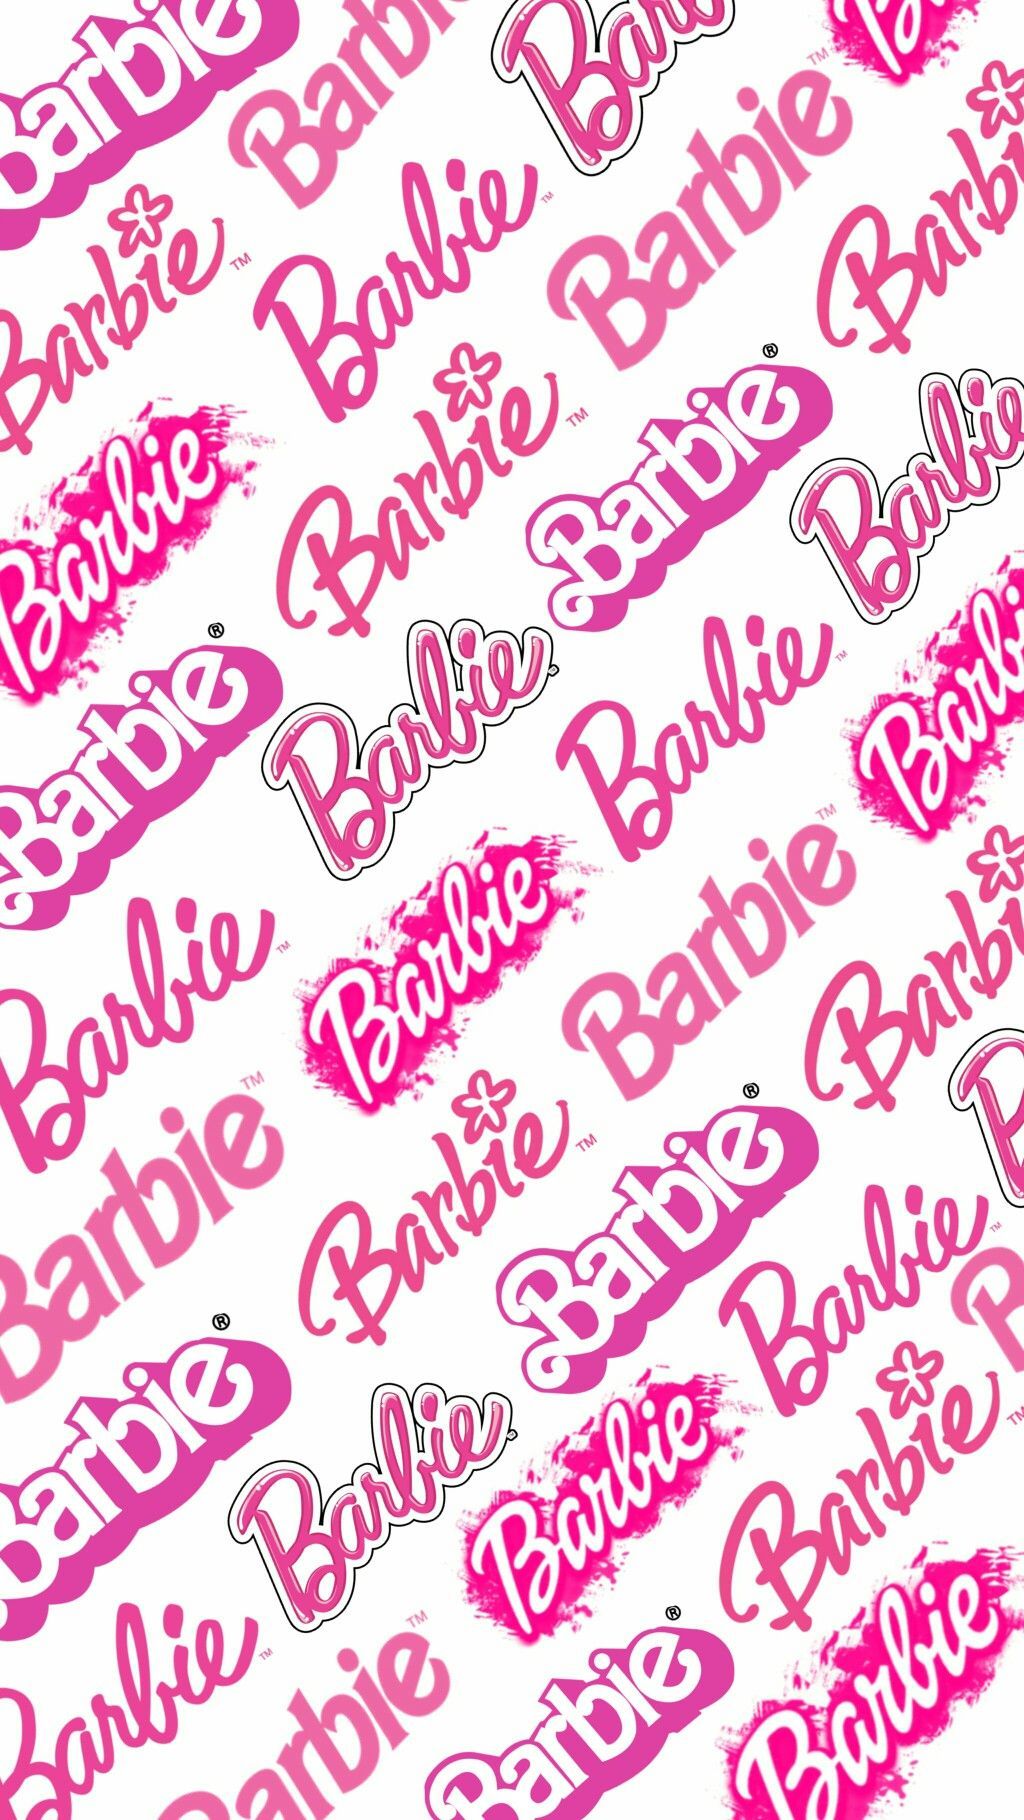 Barbie world. Wallpaper